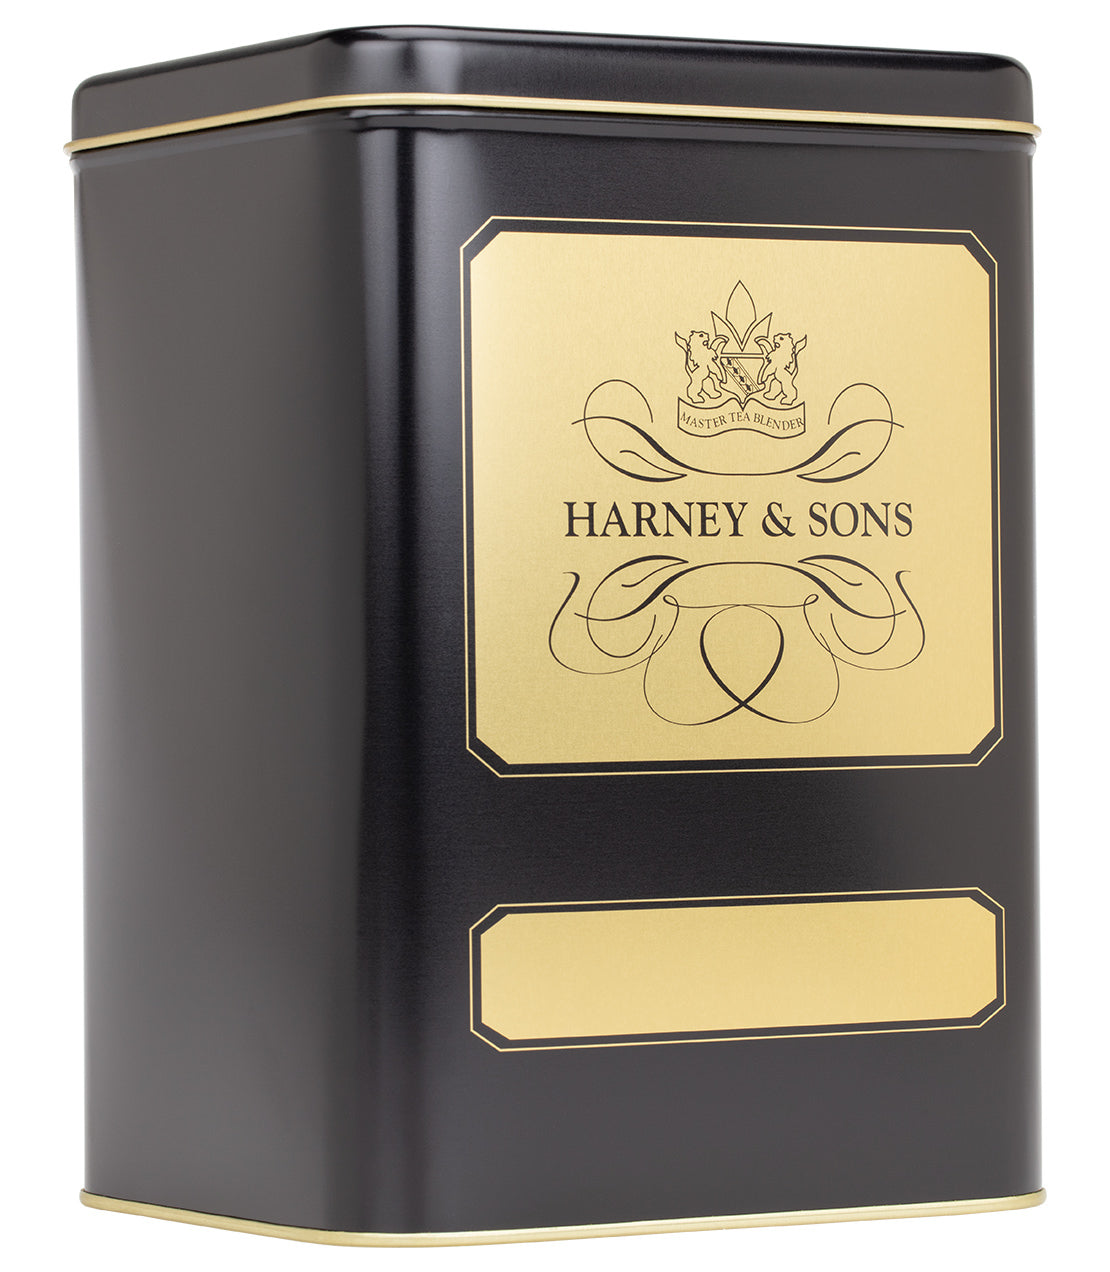 Harney & Sons Black Empty Tea Tin - 3 lb - Empty Tea Tin - 3 lb.  - Harney & Sons Fine Teas